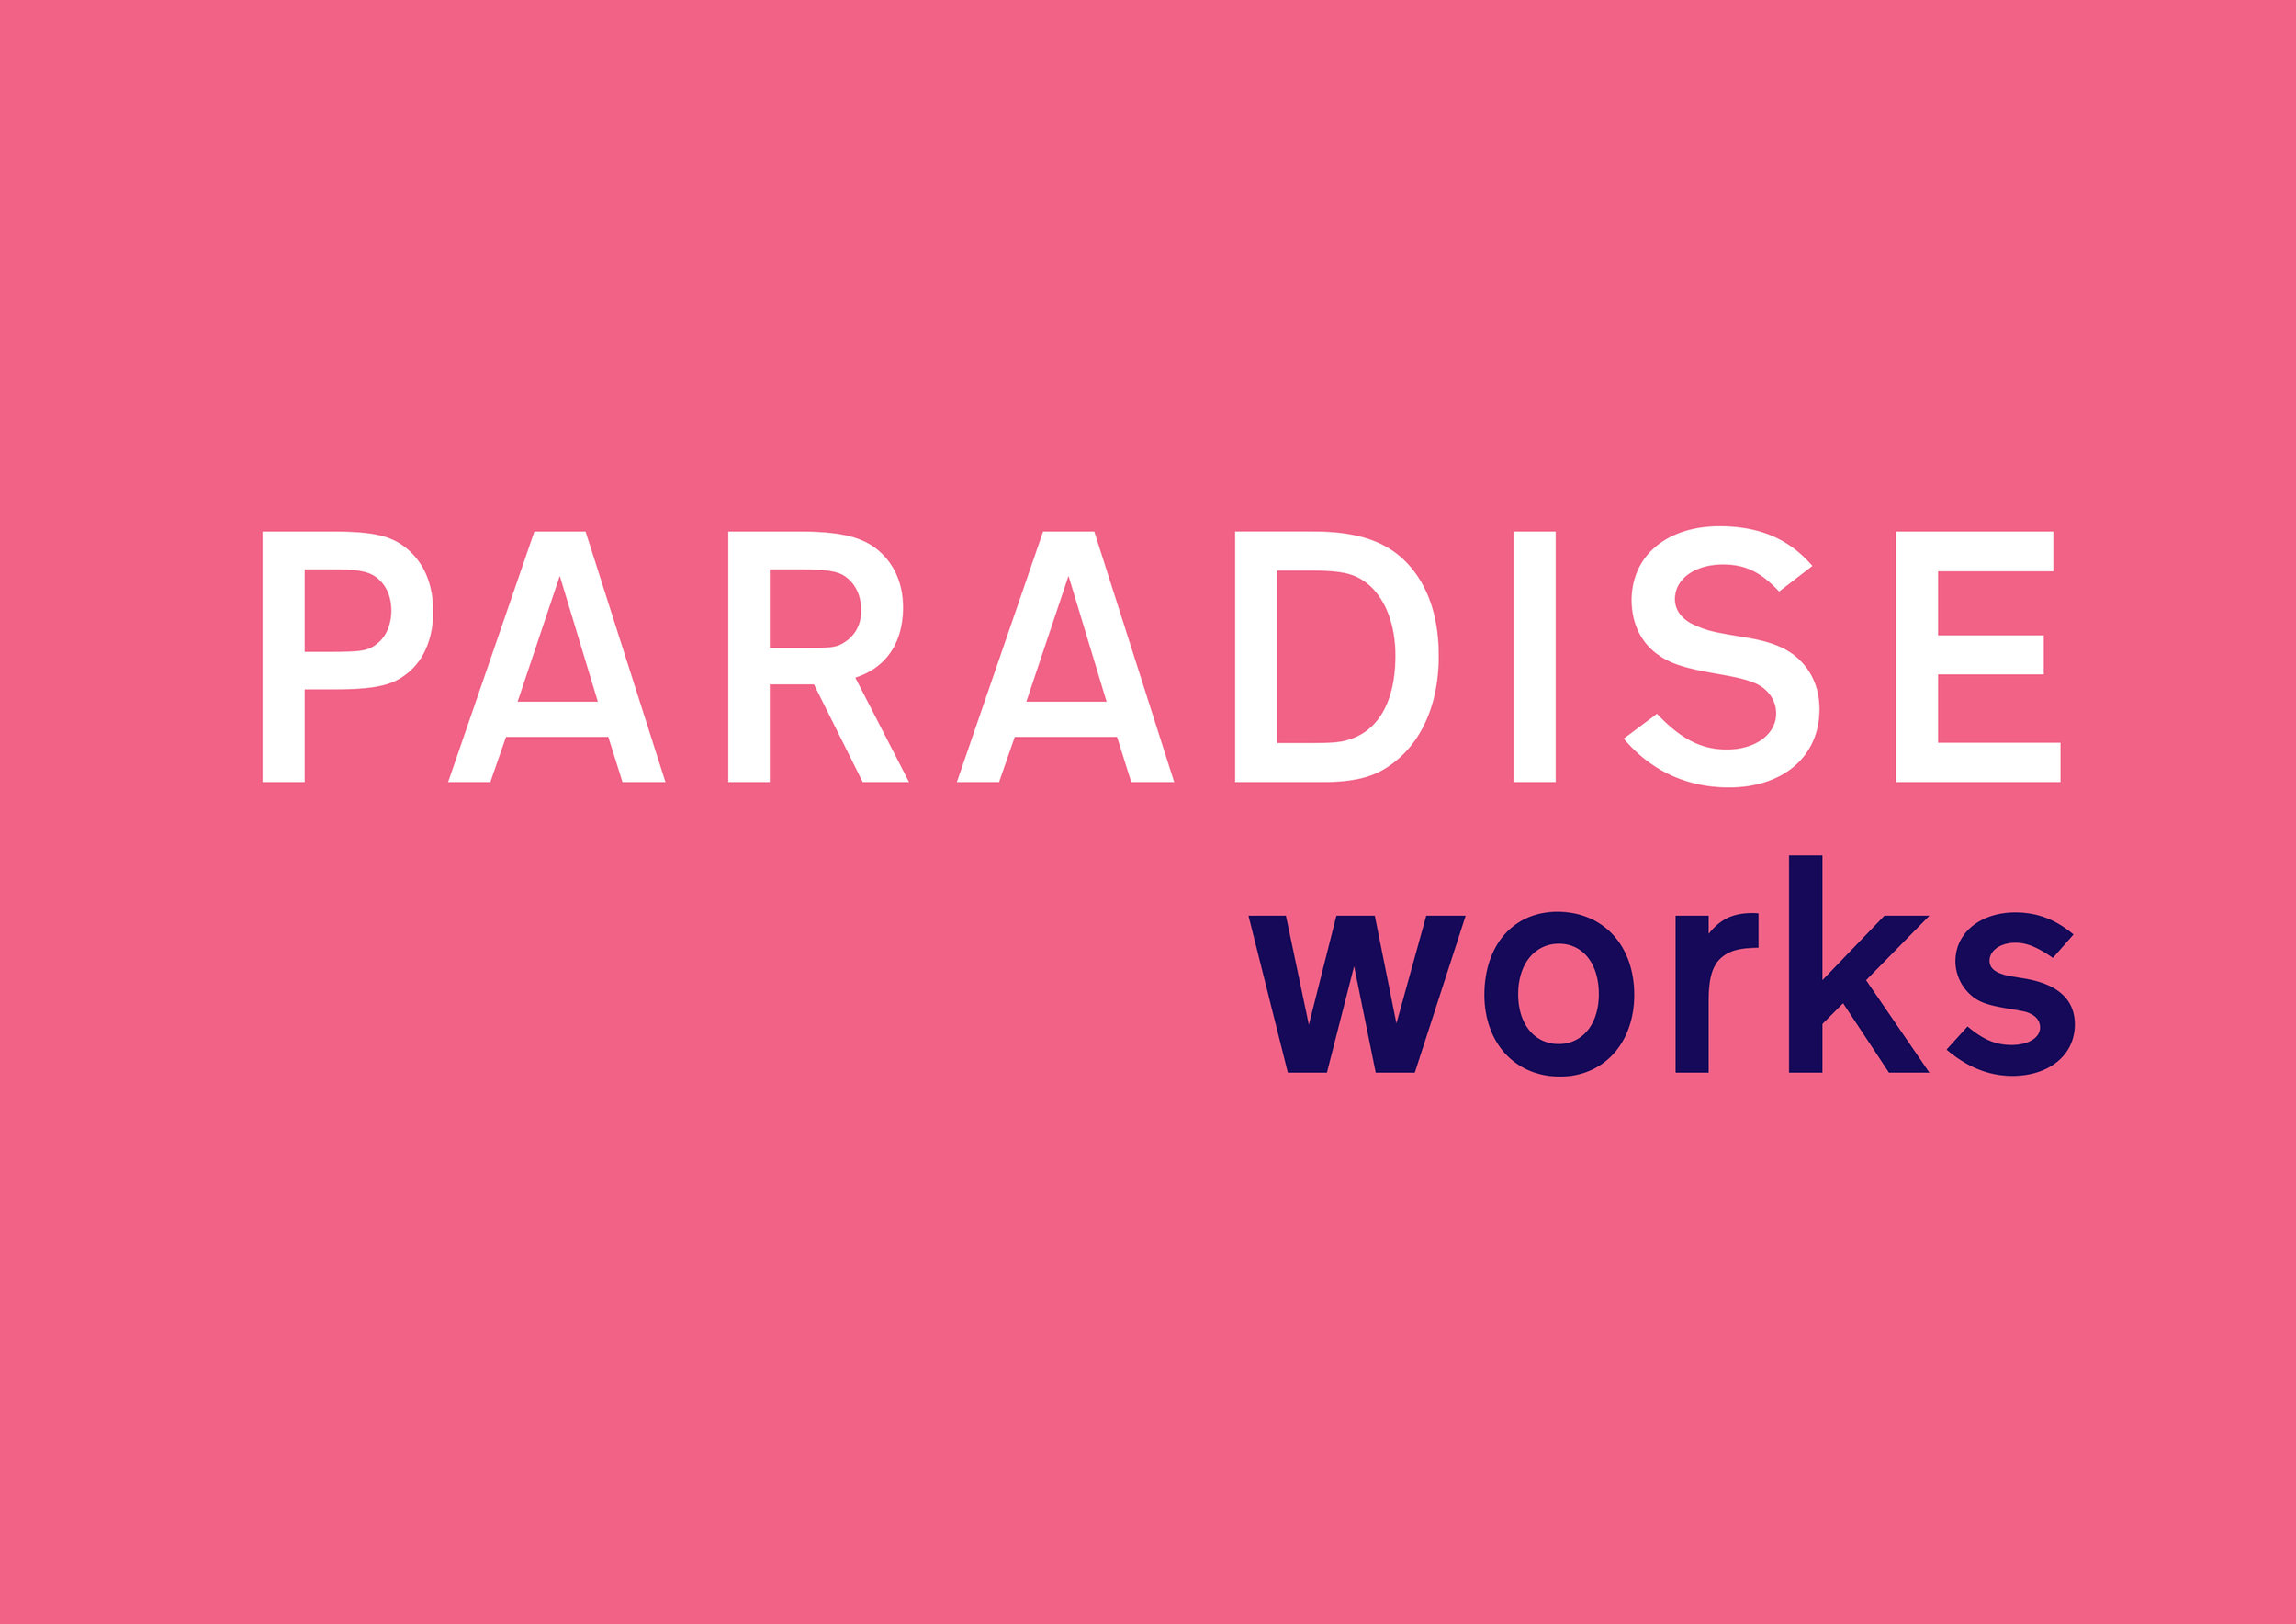 Paradise works logo high res.jpeg